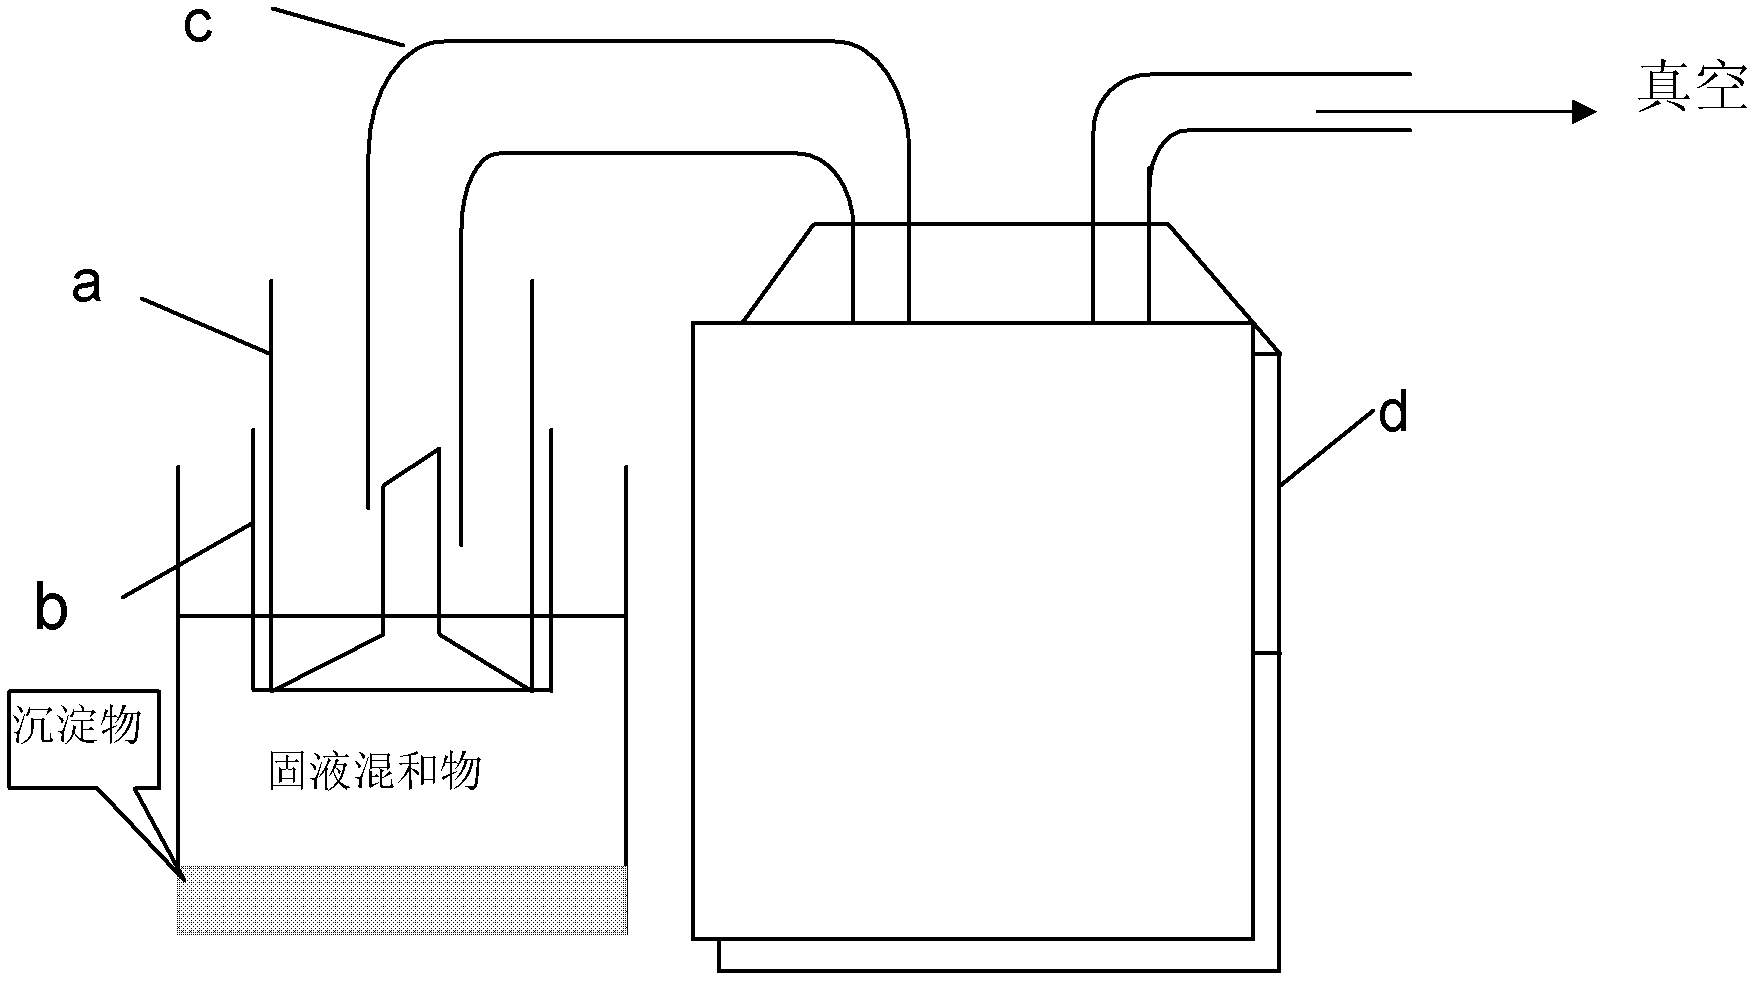 Novel solid-liquid separation leaching device